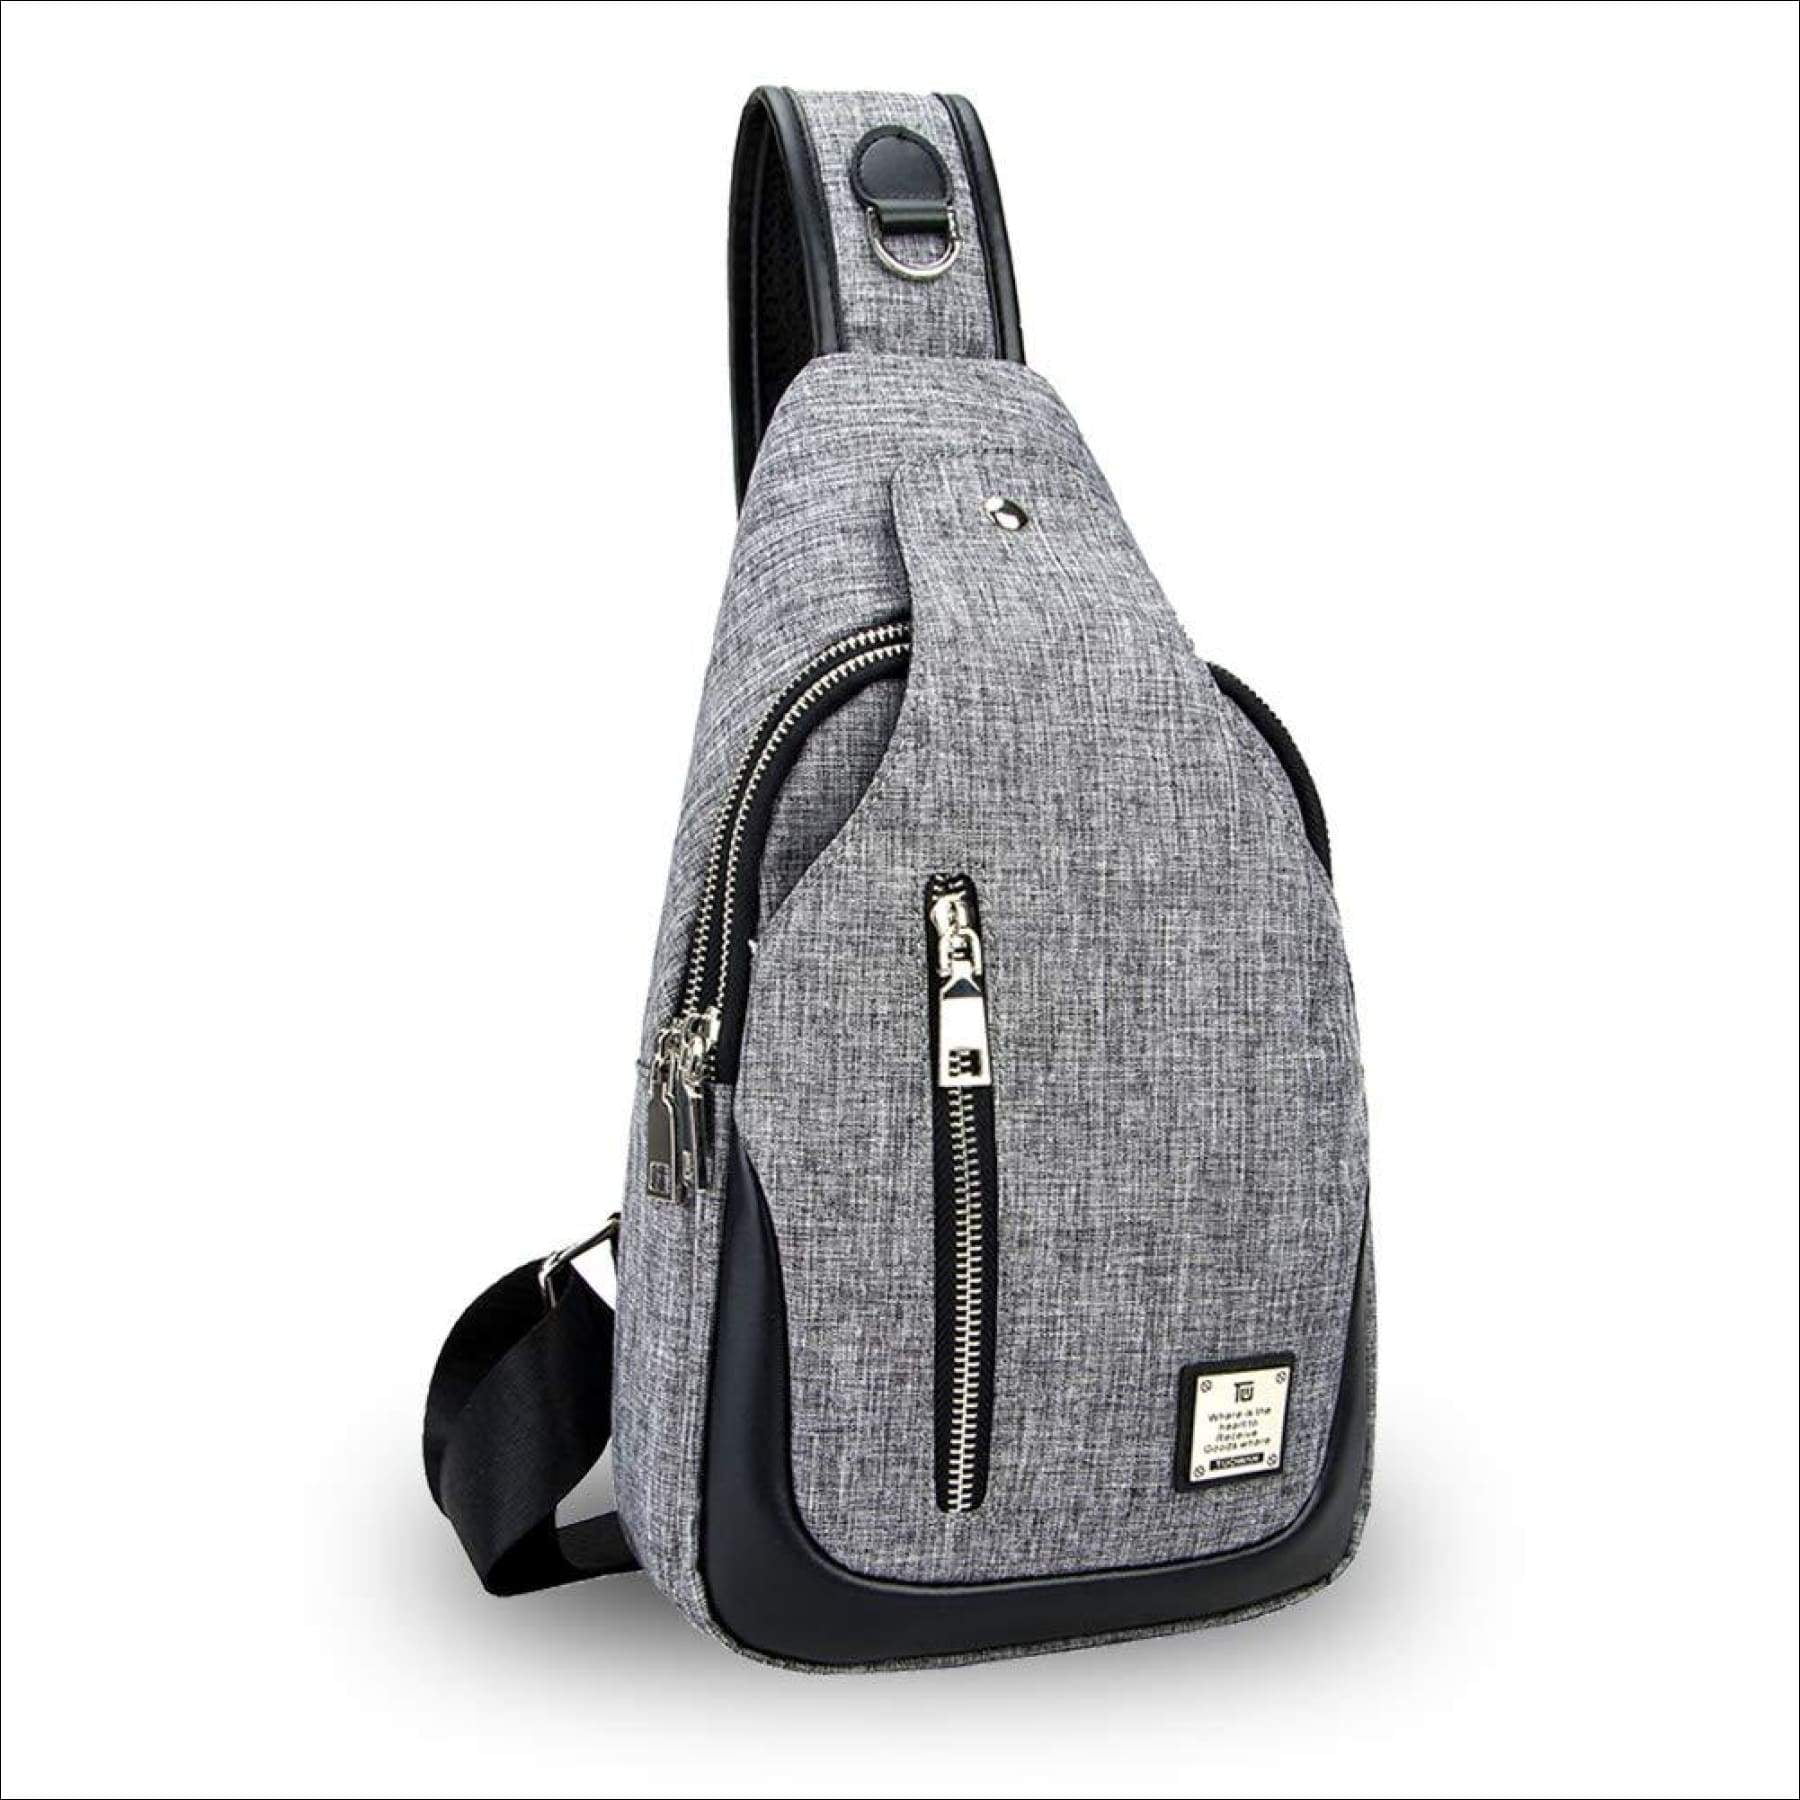 GTI - Sling Bag, Sling Backpack Outdoor Hiking Travel Daypack Shoulder Chest Side Bags Crossbody ...